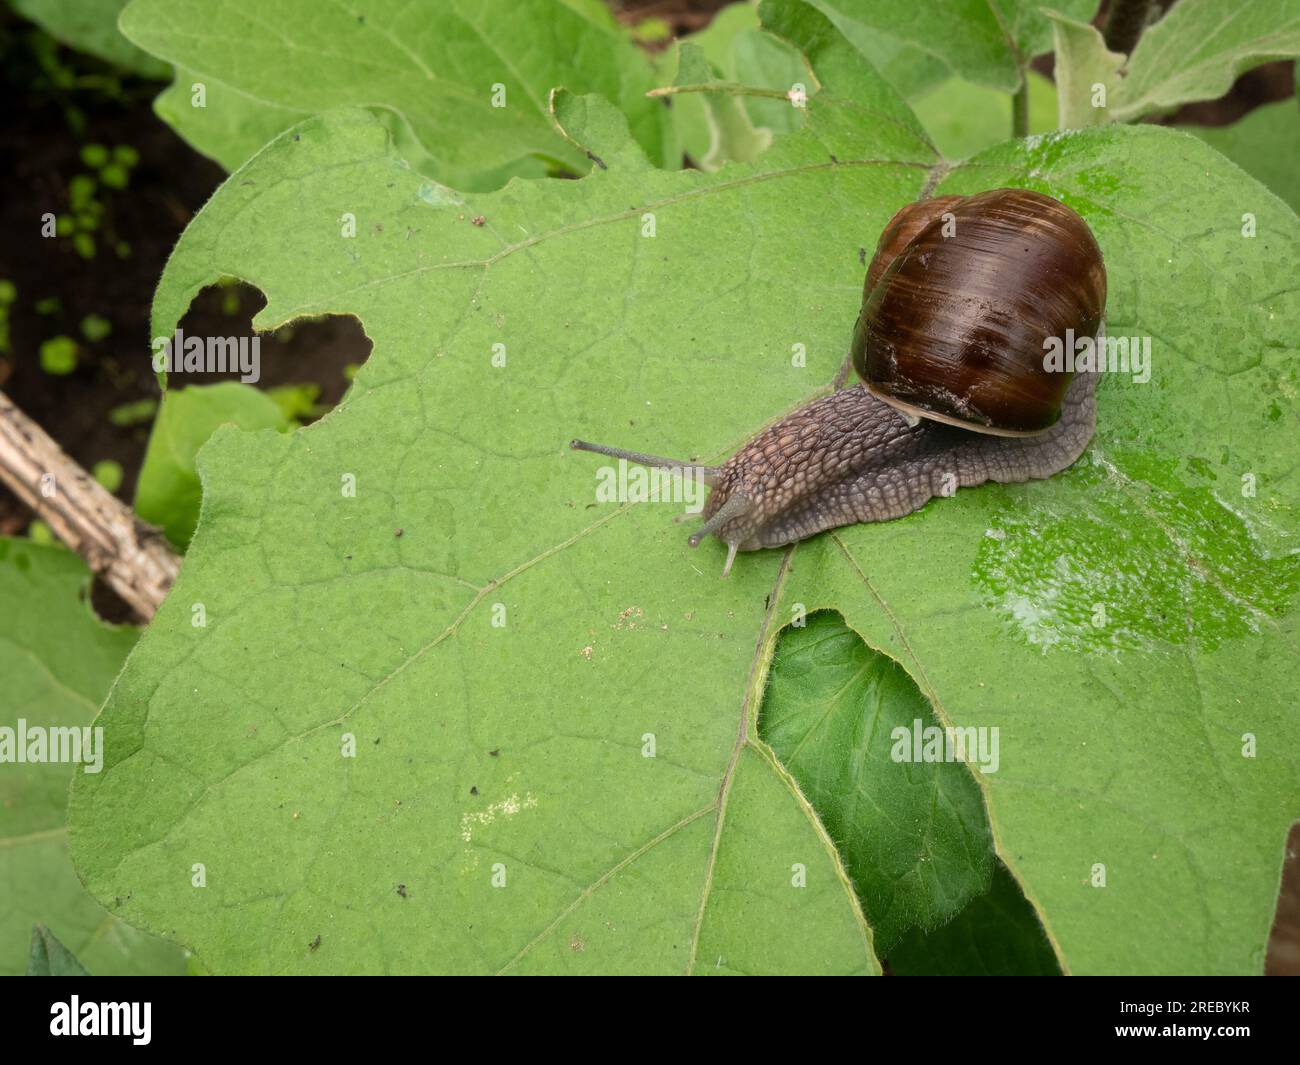 Hungry snail devours a leaf of garden eggplant and secretes mucus. Agricultural pest problem. Plant damage concept Stock Photo